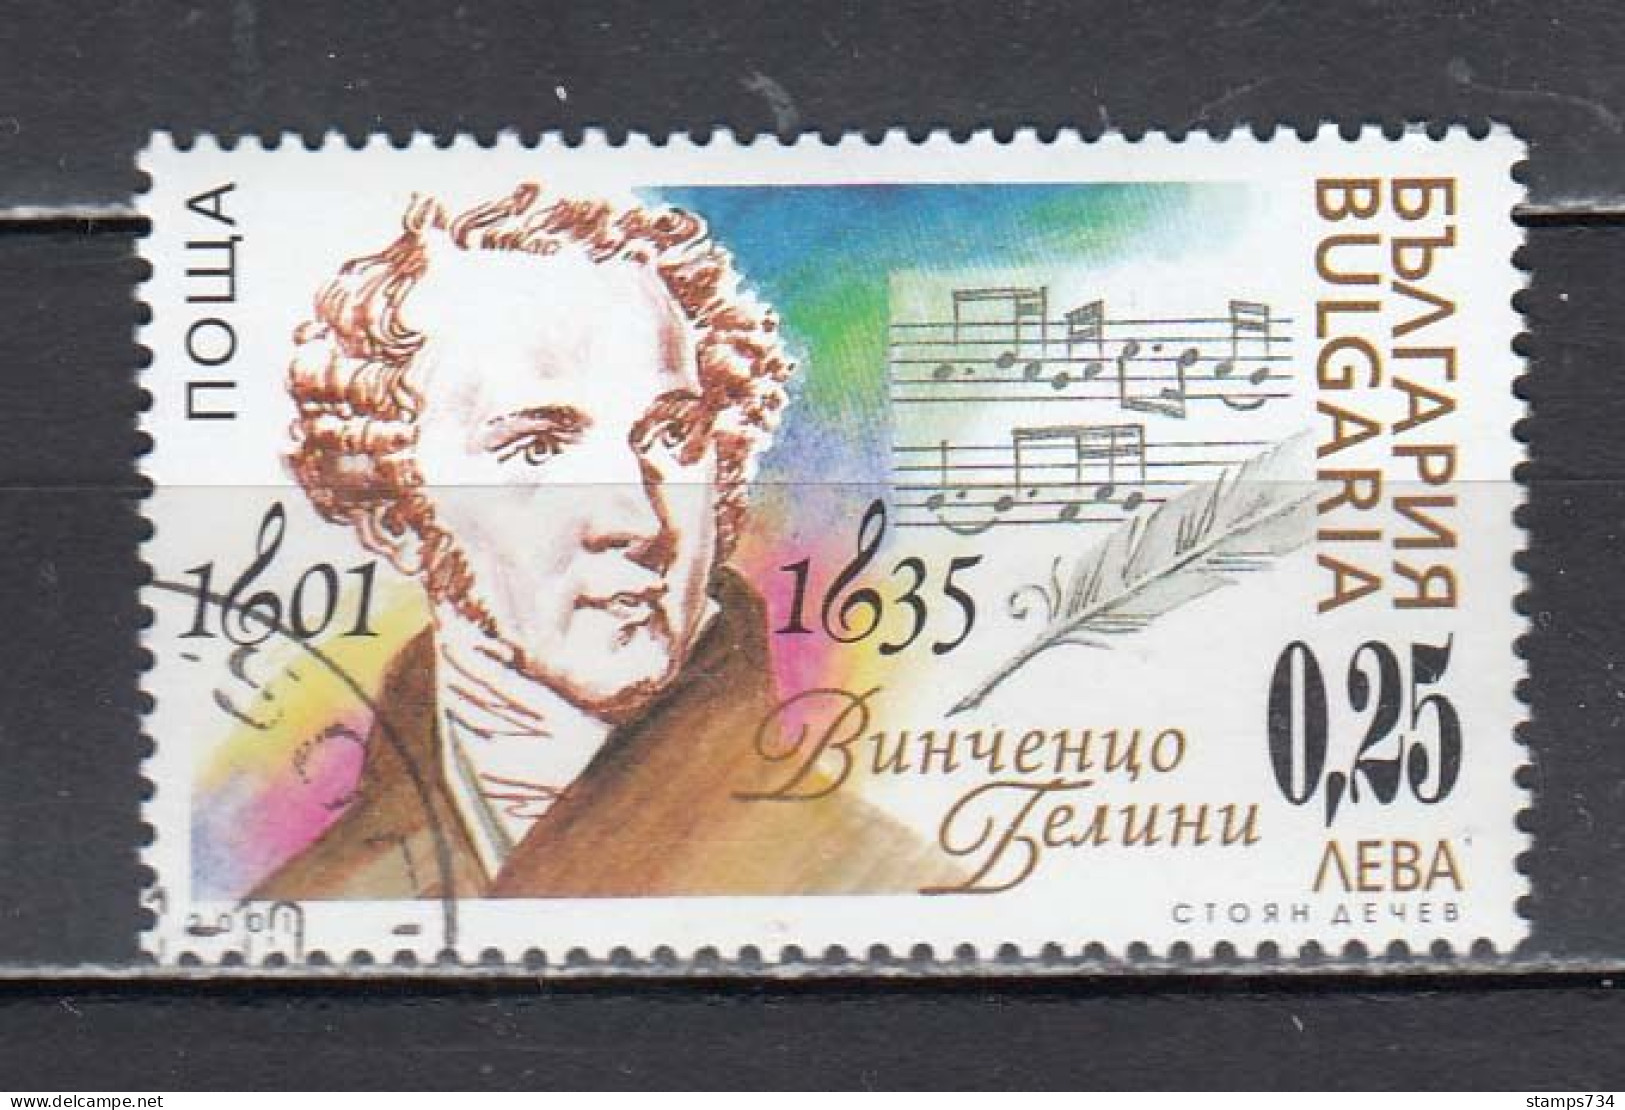 Bulgaria 2001 - 200th Birthday Of Vincenzo Bellini, Italian Composer, Mi-Nr. 4538, Used - Used Stamps